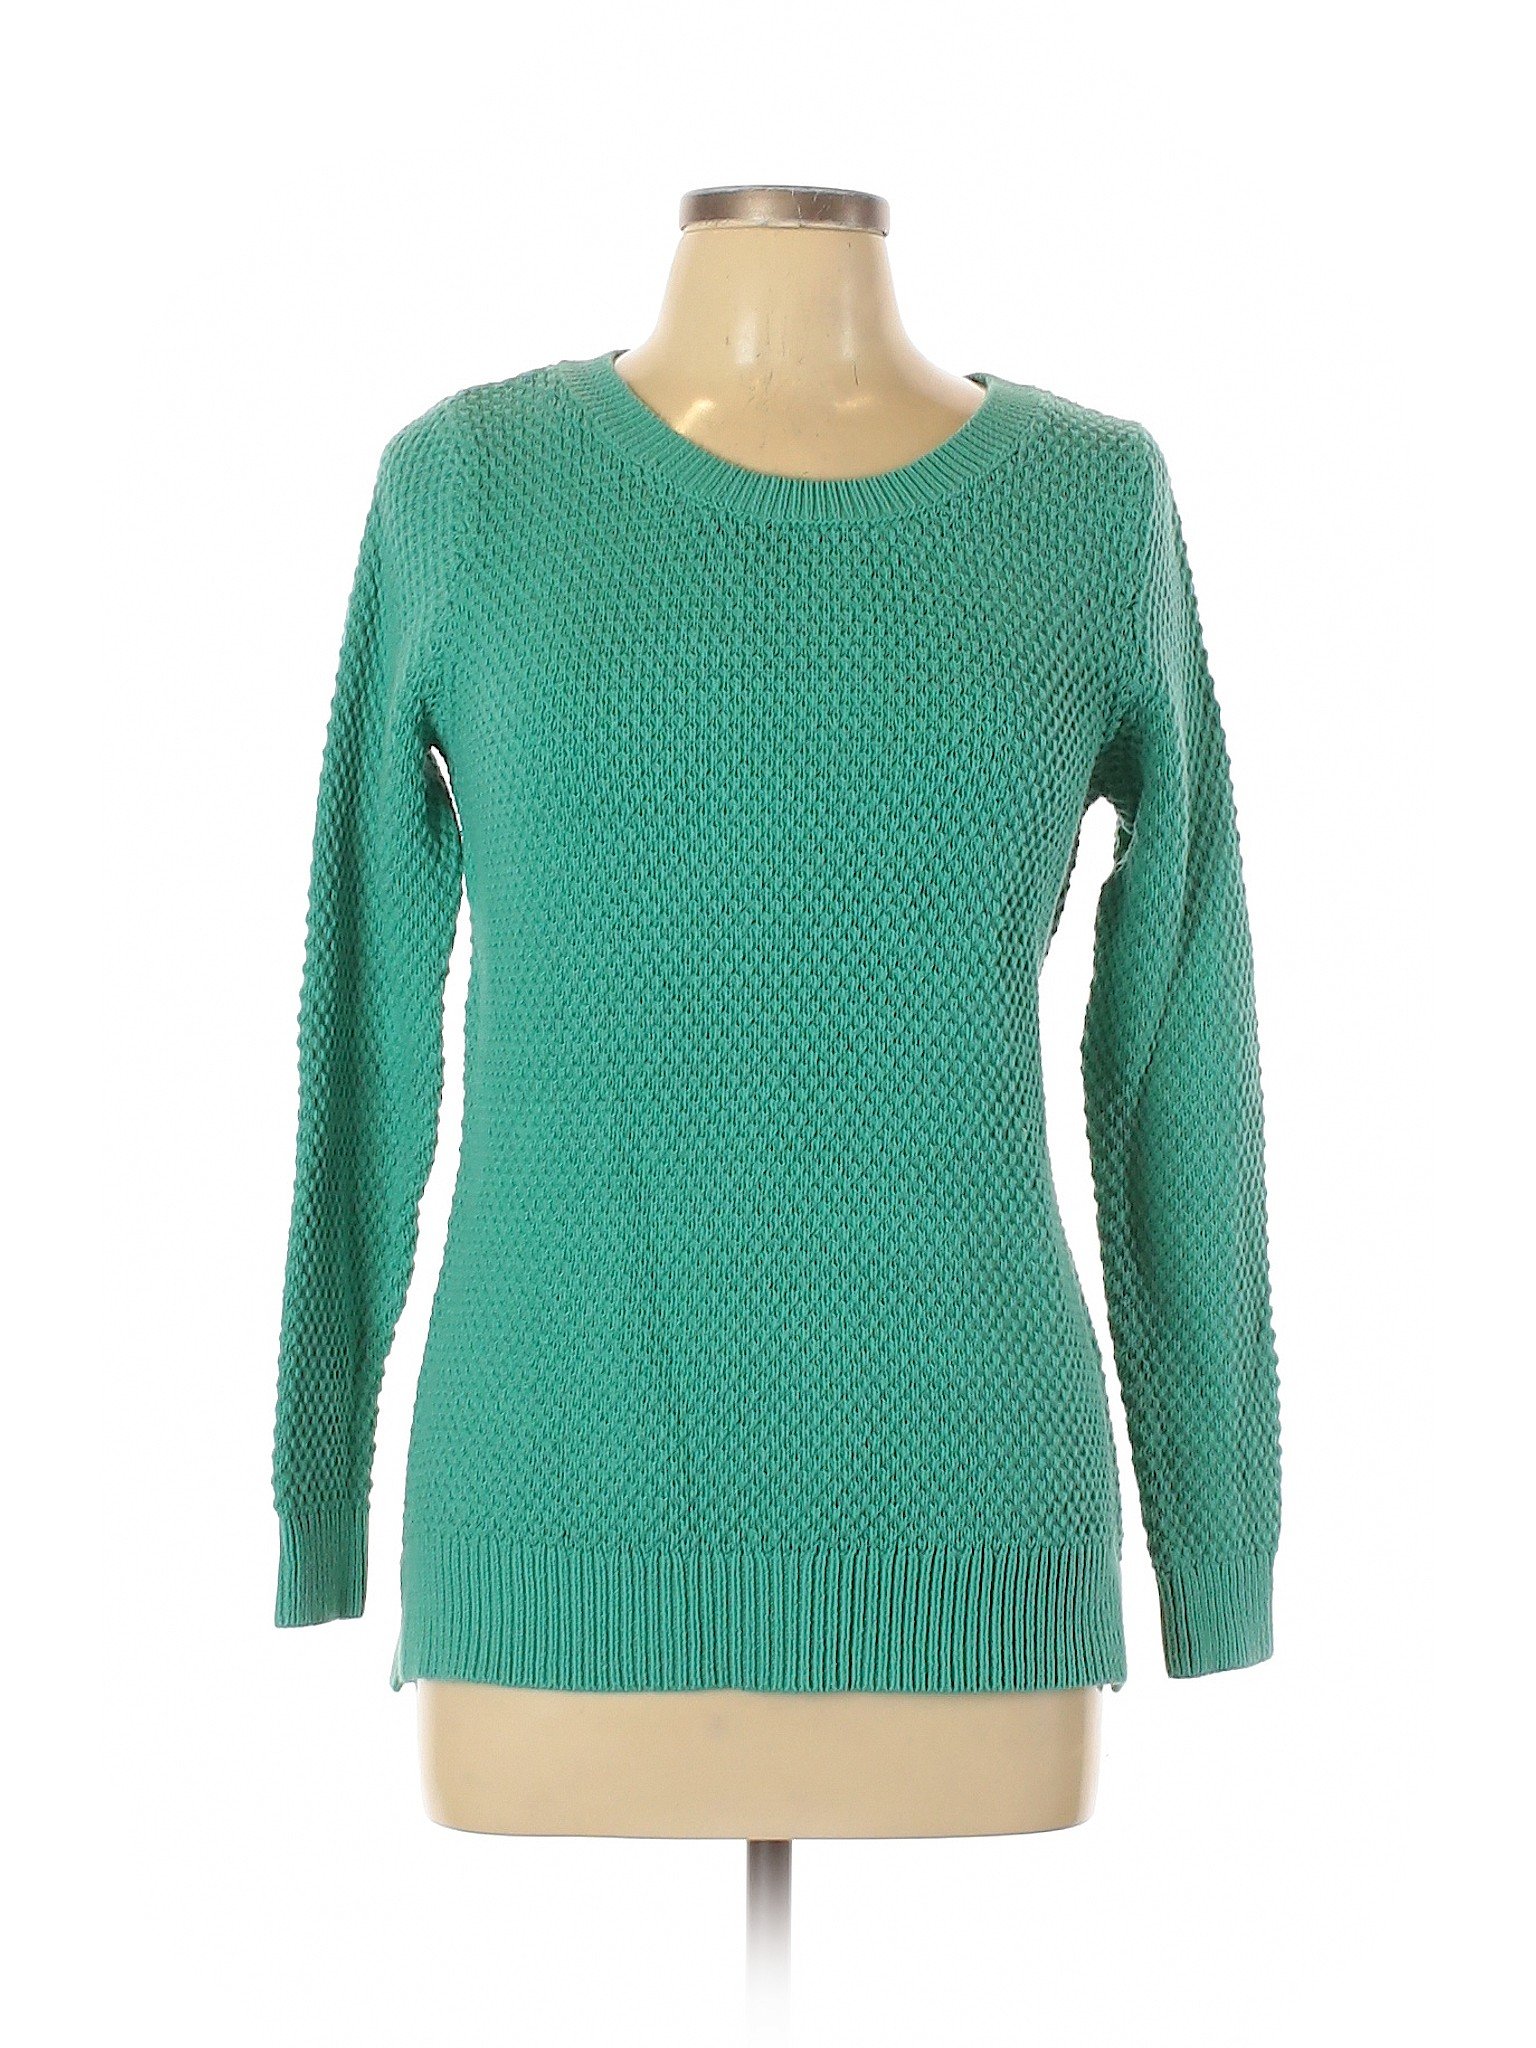 Gap Outlet Women Green Pullover Sweater M | eBay